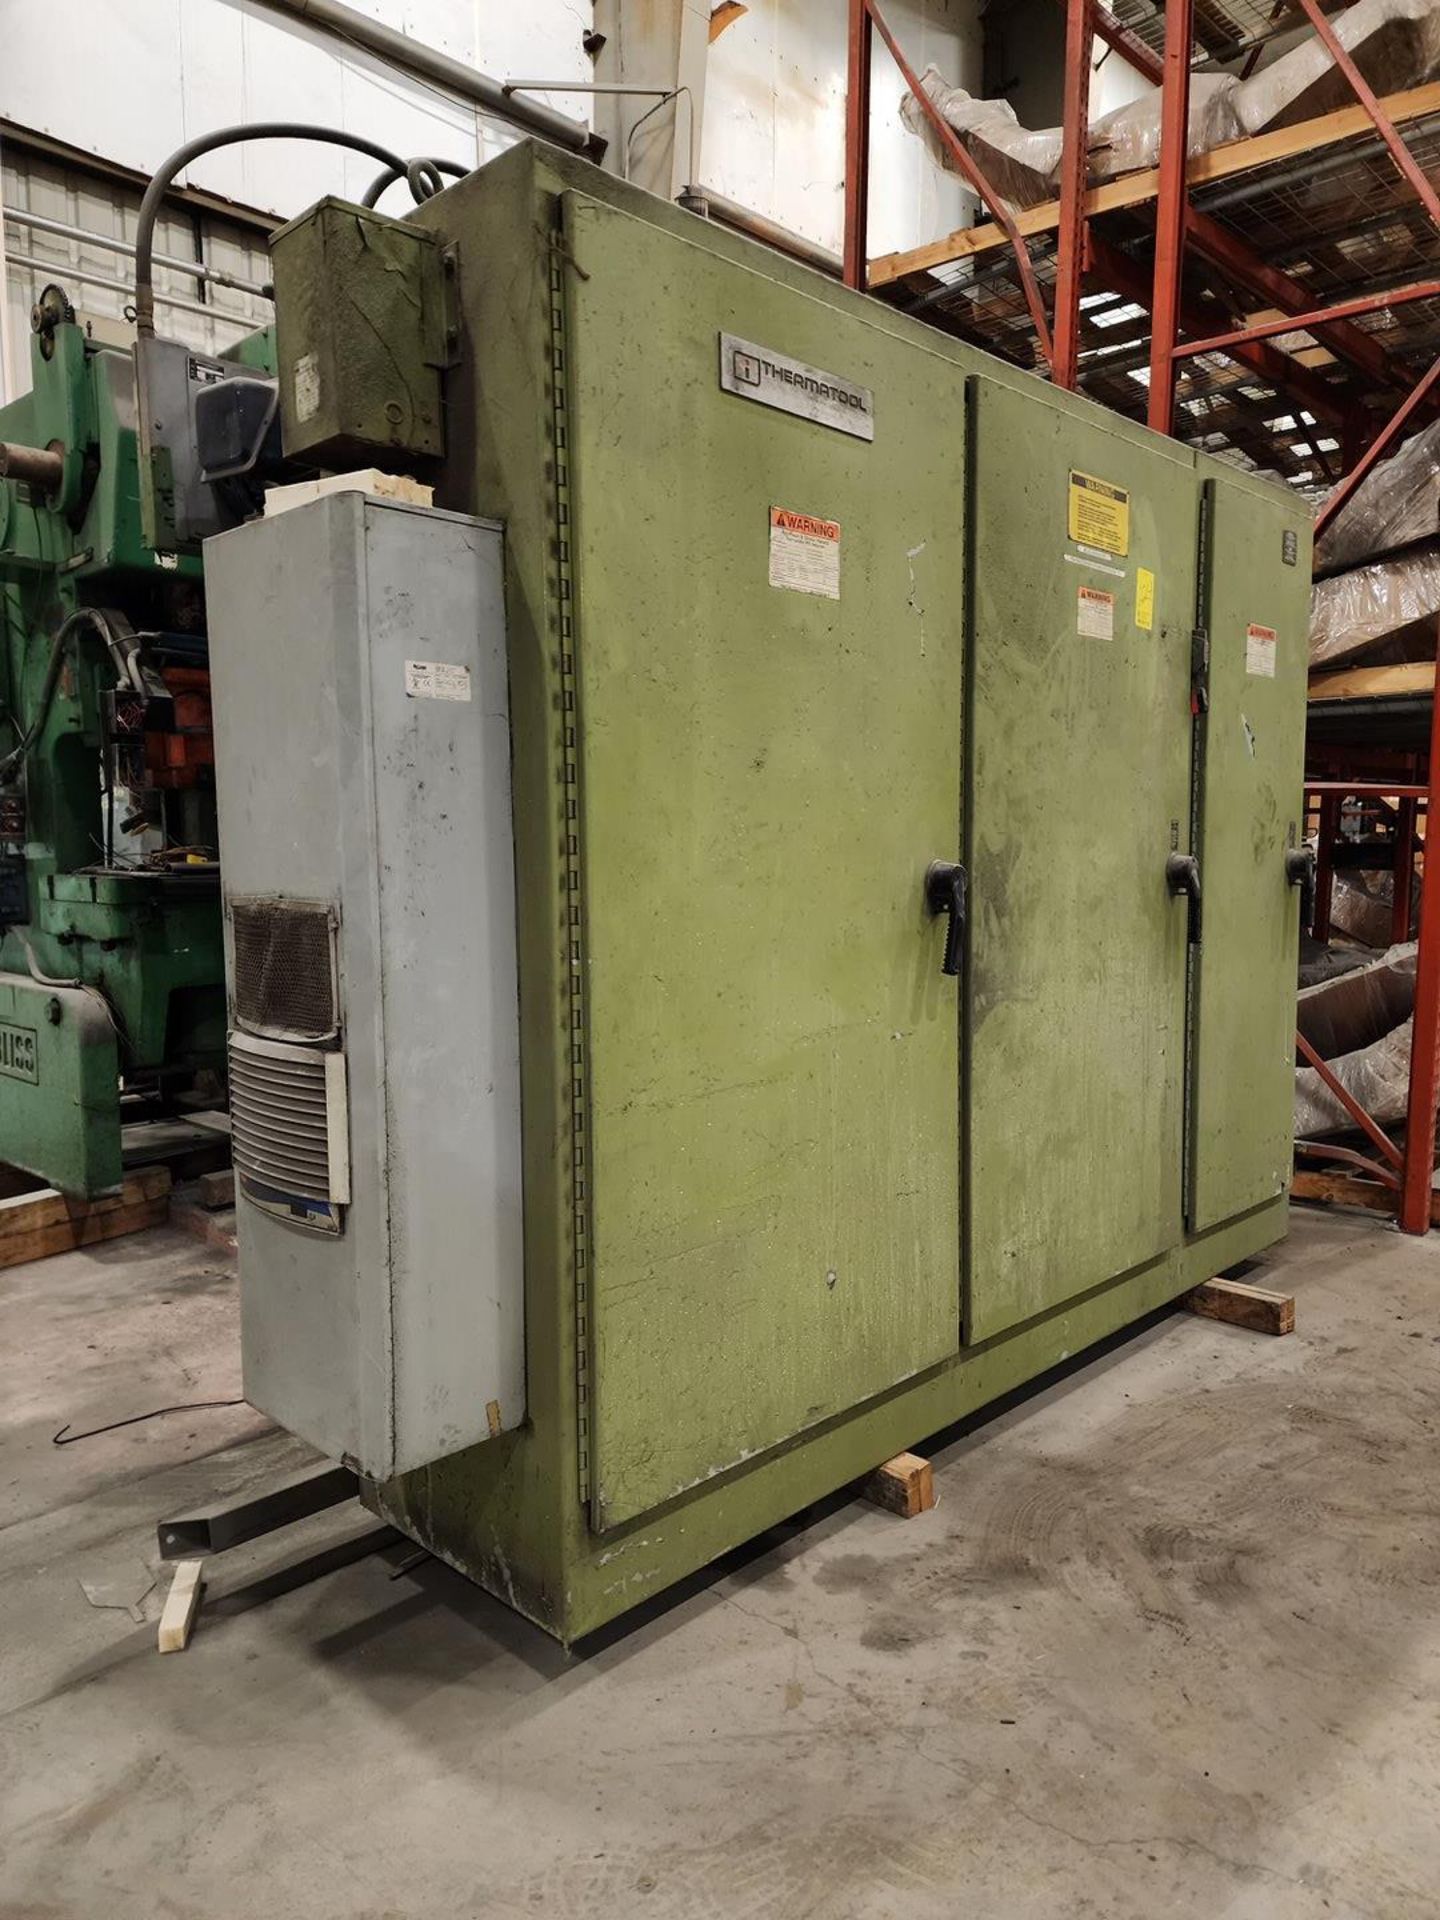 Thermatool Control Panel W/ McLean Ele Enclosure Air Conditioner, 220/230V, 50/60HZ, 1PH - Image 3 of 7